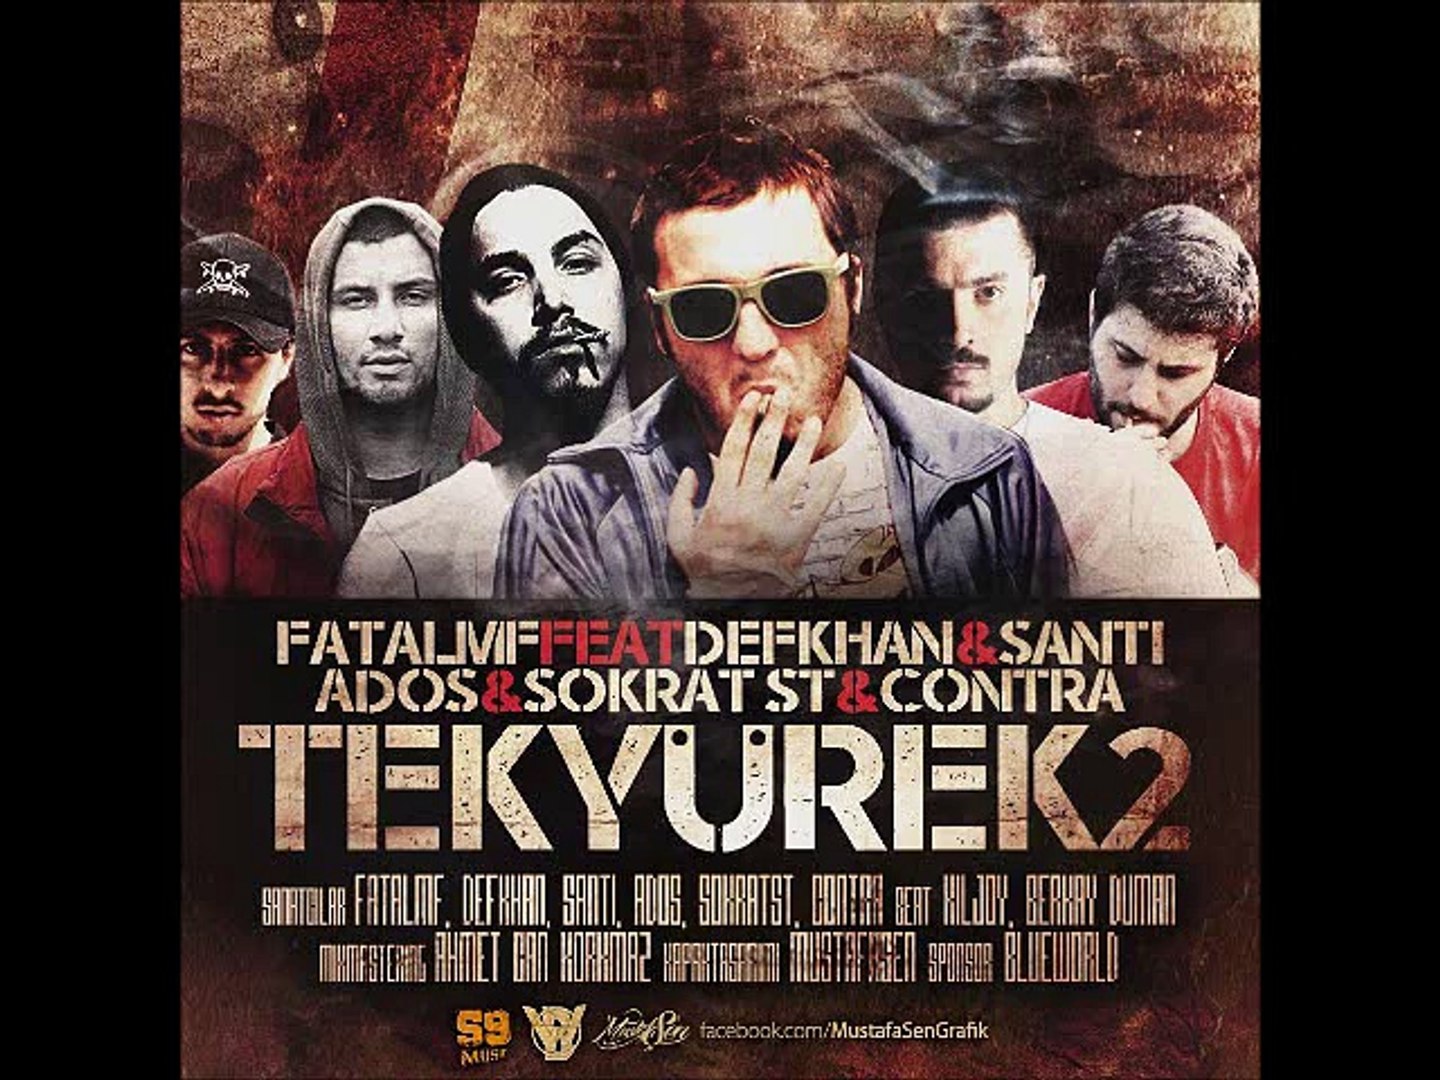 Fatal MF Feat. Ados, Defkhan, Contra, Santi, Sokrat St - Tek Yürek 2 -  Dailymotion Video